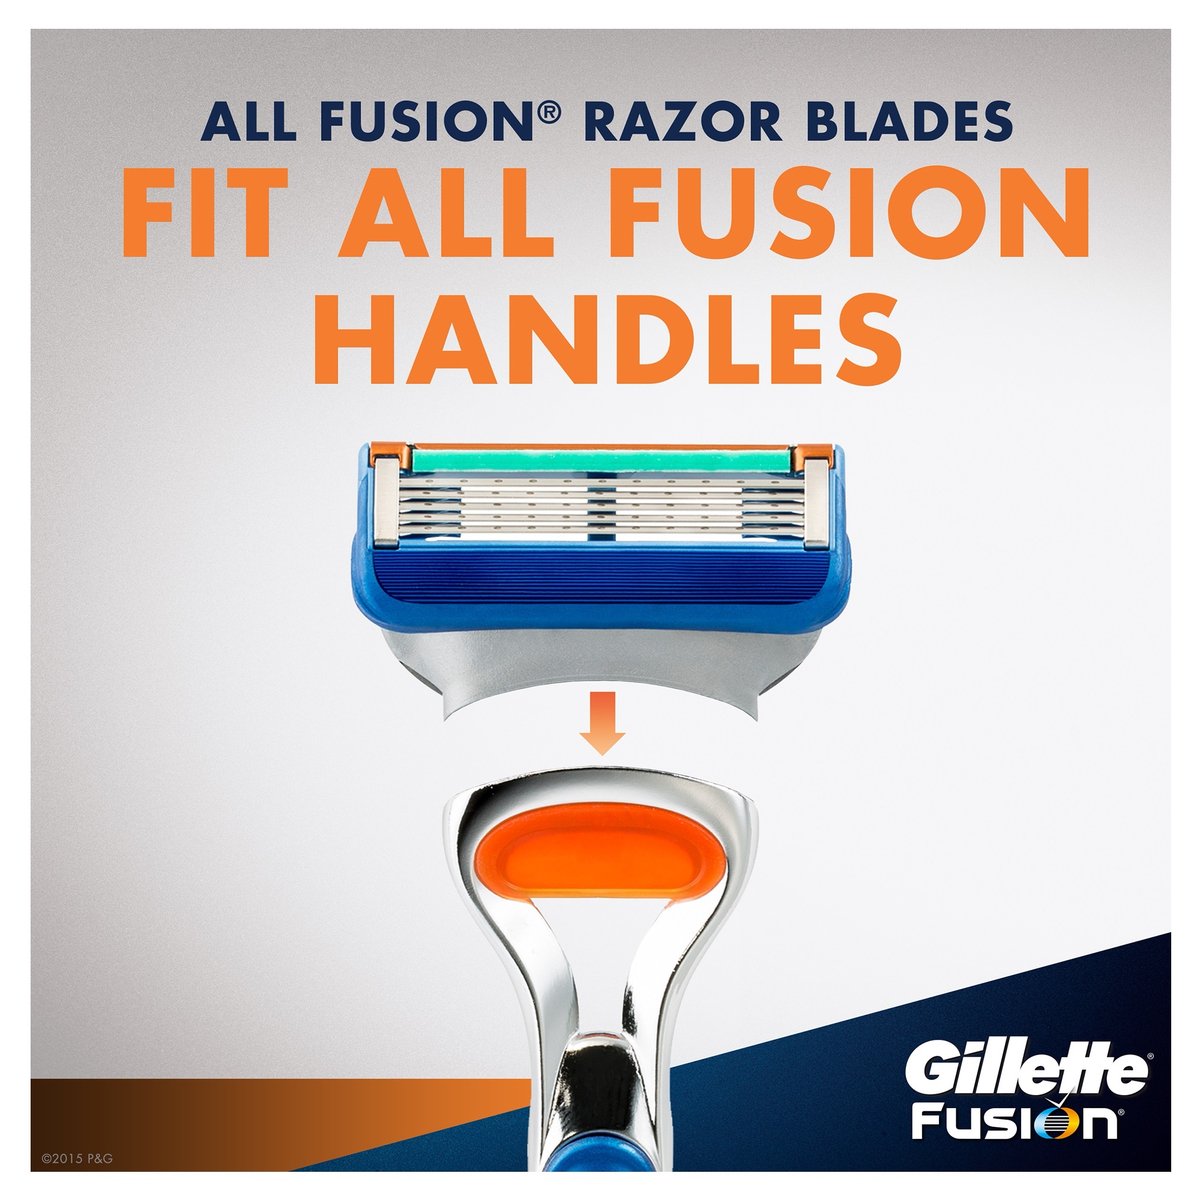 Gillette Fusion Men’s Razor & 10 Blades Refills